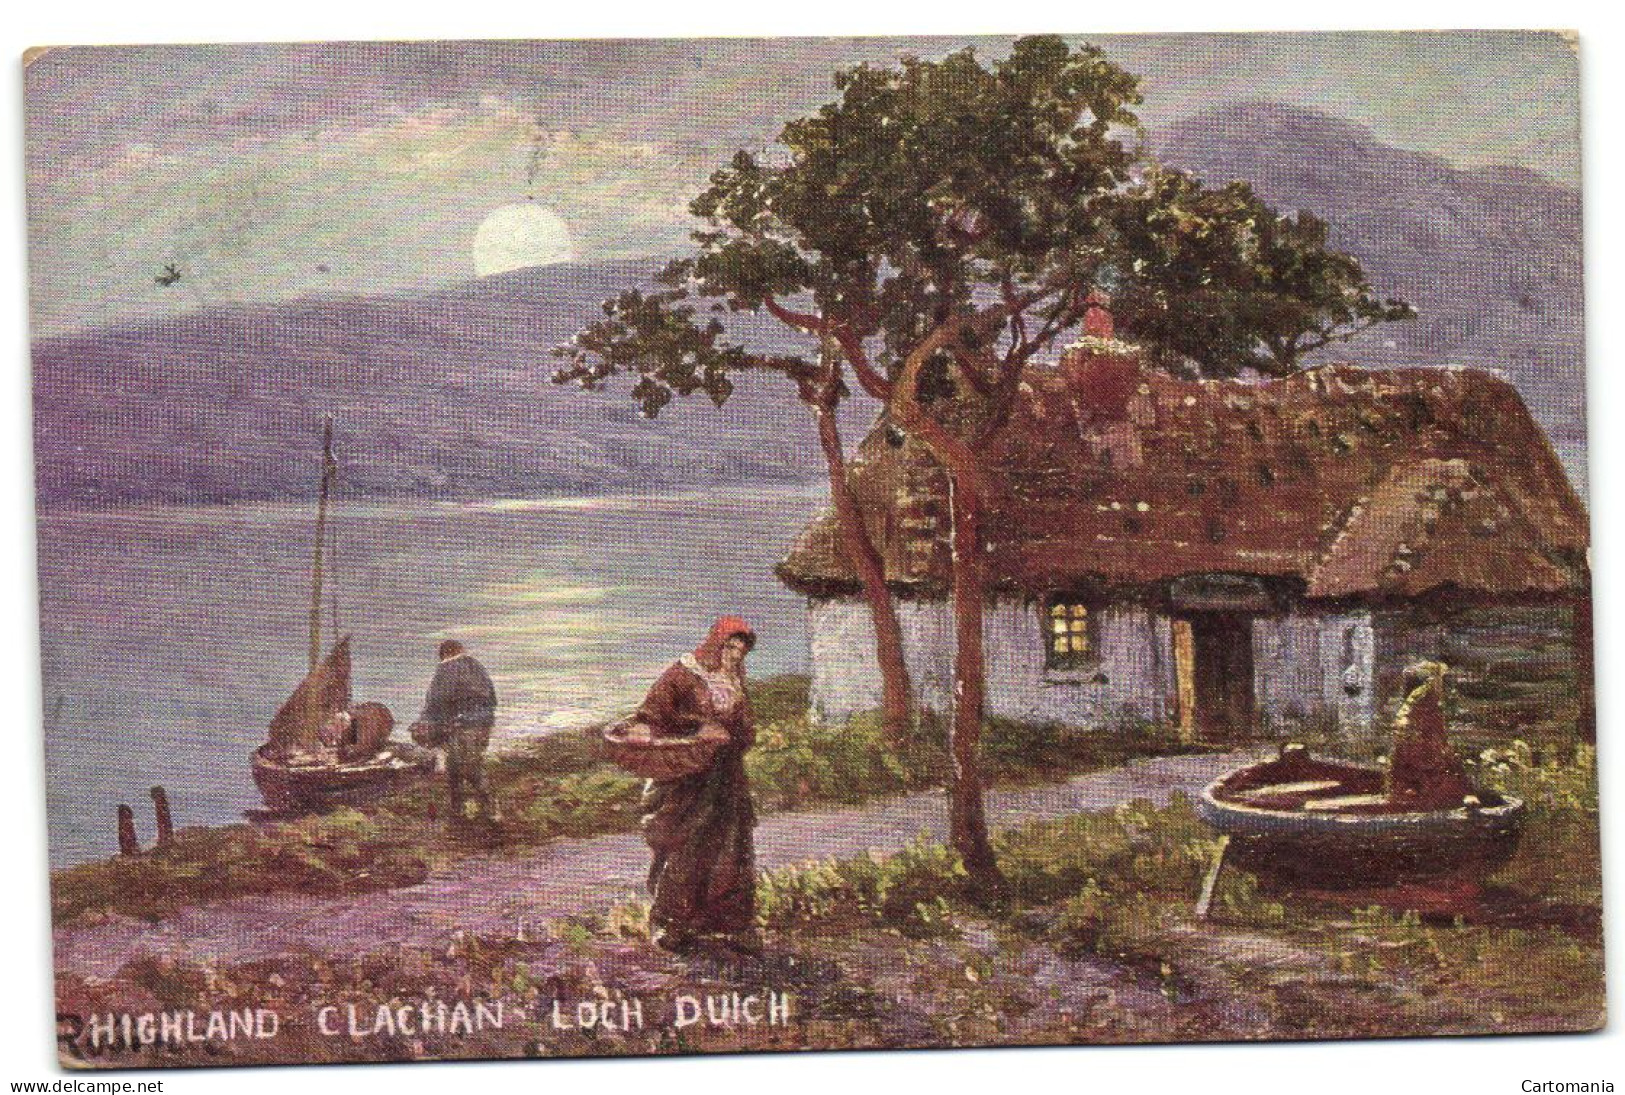 Highland Clachan - Loch Duich - Ross & Cromarty